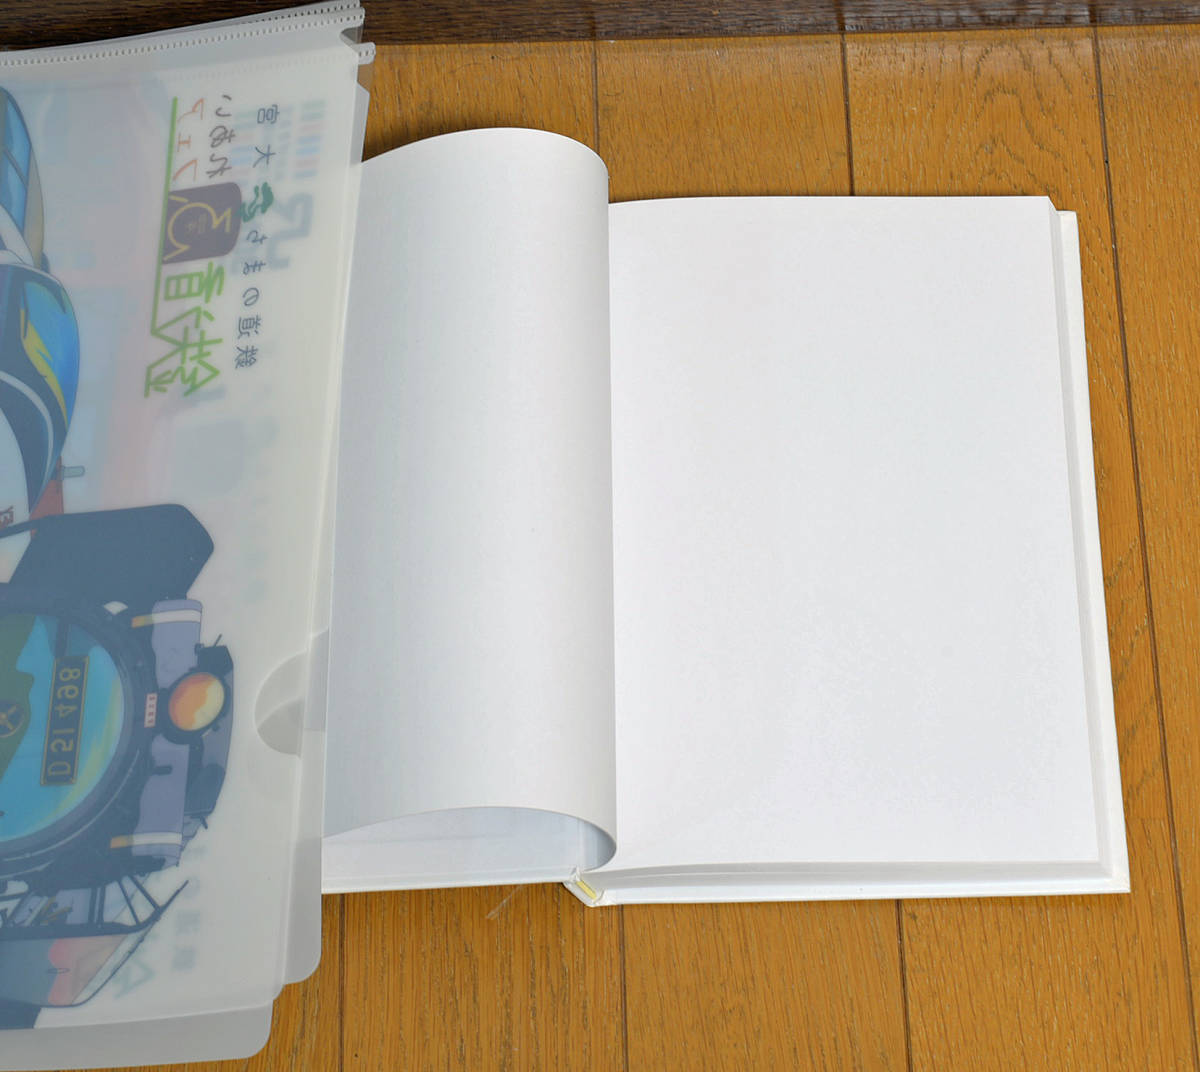 ** железная дорога музей оригинал Note + Omiya железная дорога ....fea прозрачный файл 3 вид + в подарок ( Kyoto железная дорога музей Grand открытый 6 anniversary commemoration жесткий картонный билет )**